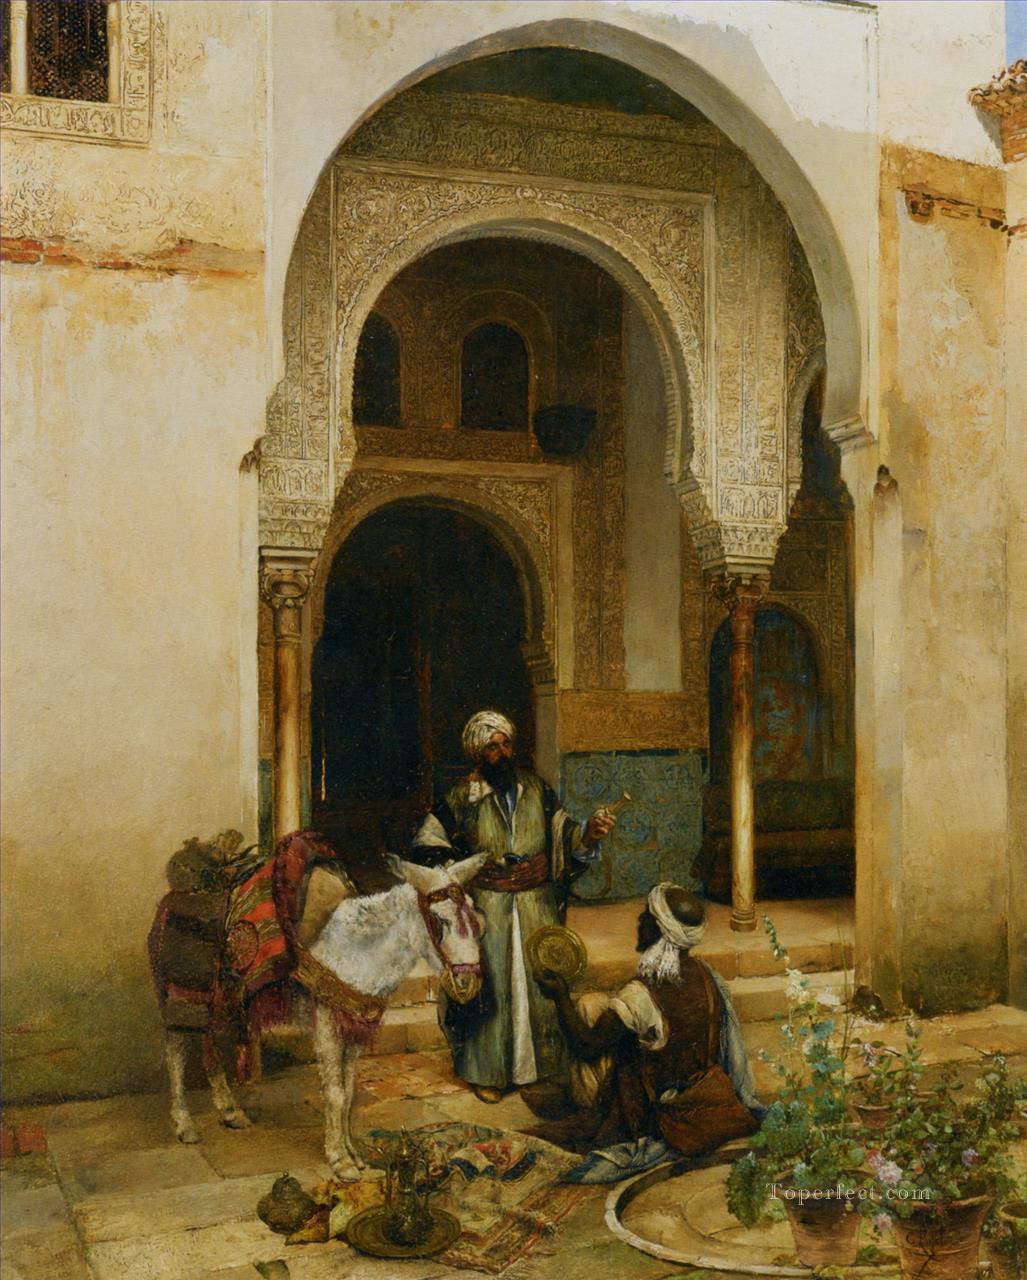 an arab merchant by clement pujol de guastavino Oil Paintings